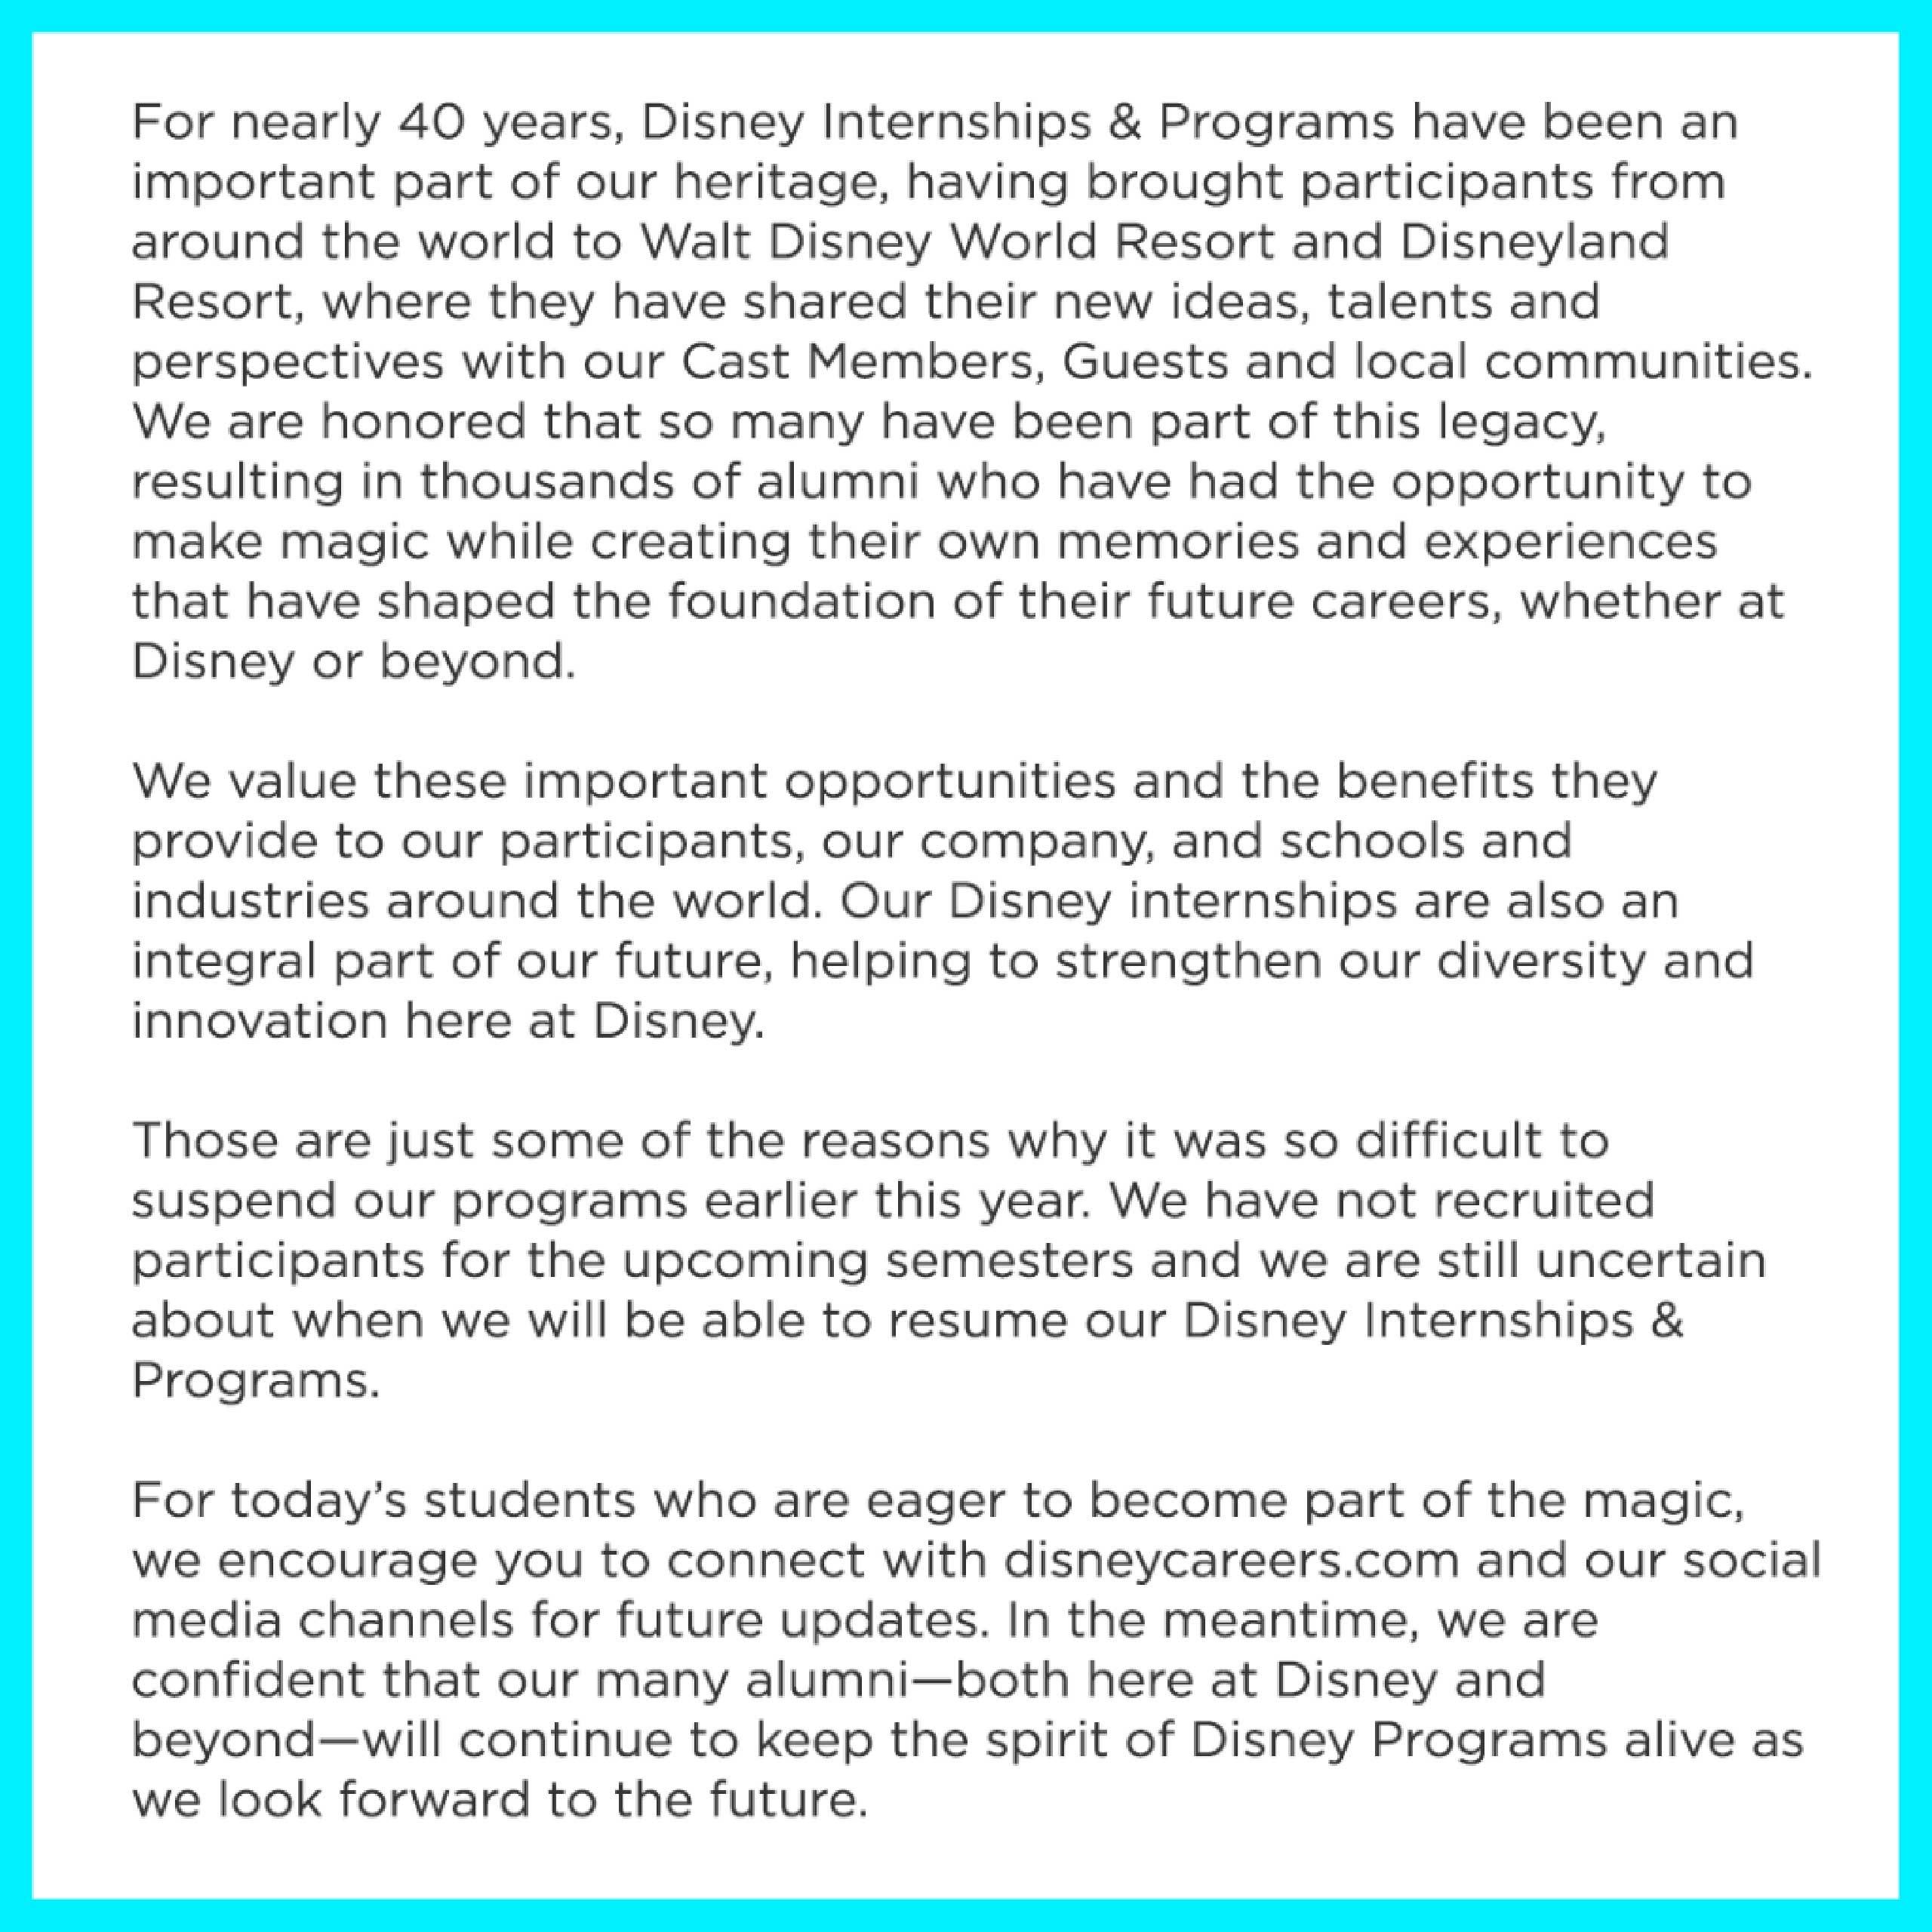 Disney Internships and Programs updates - December 2020